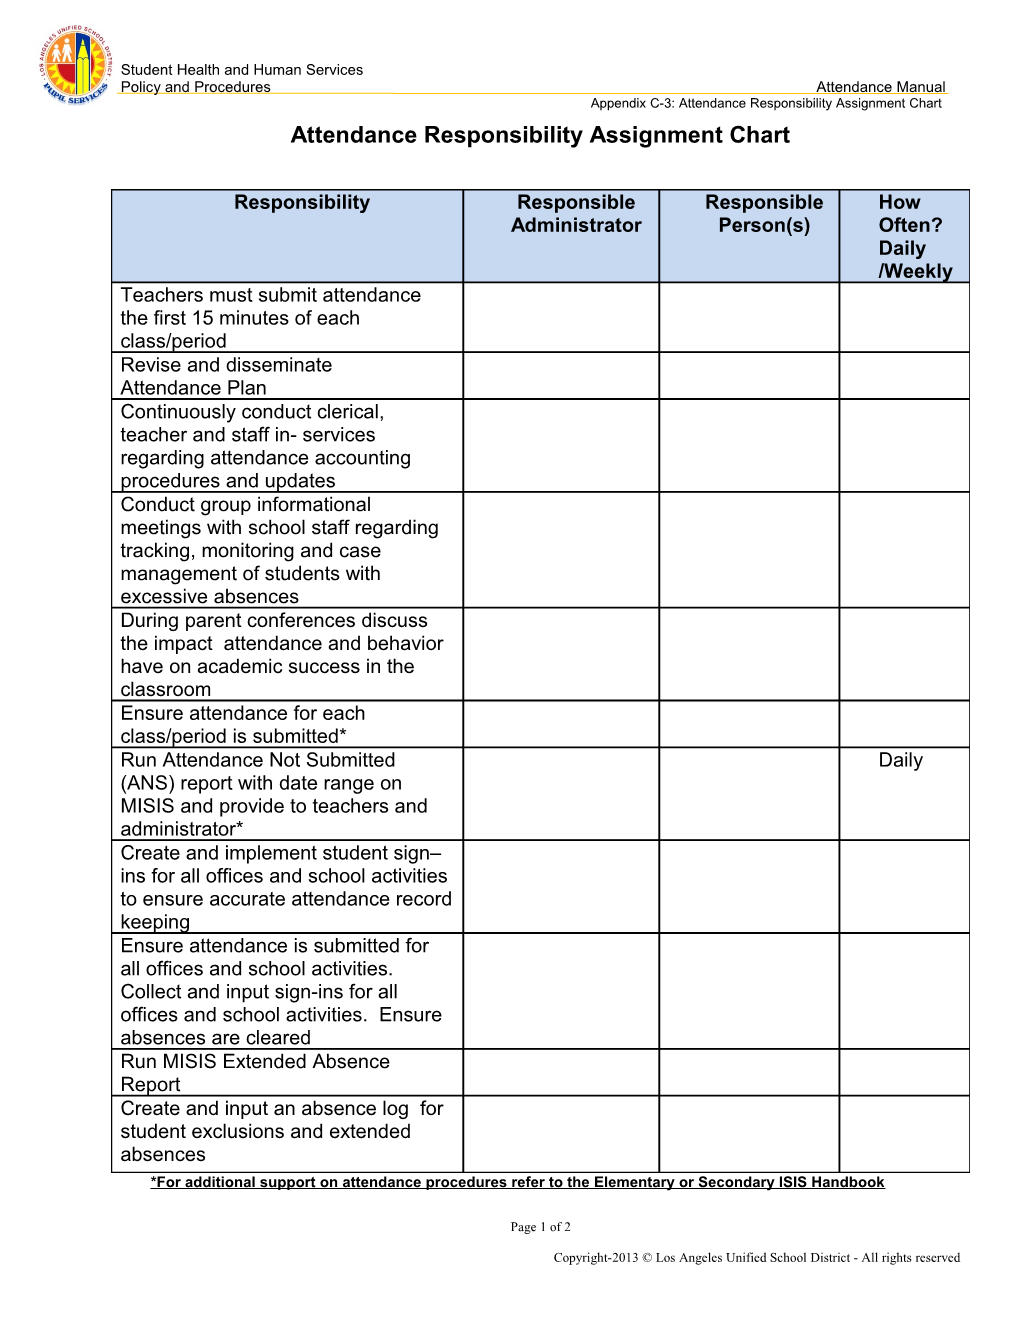 Attendance Responsibility Assignment Chart